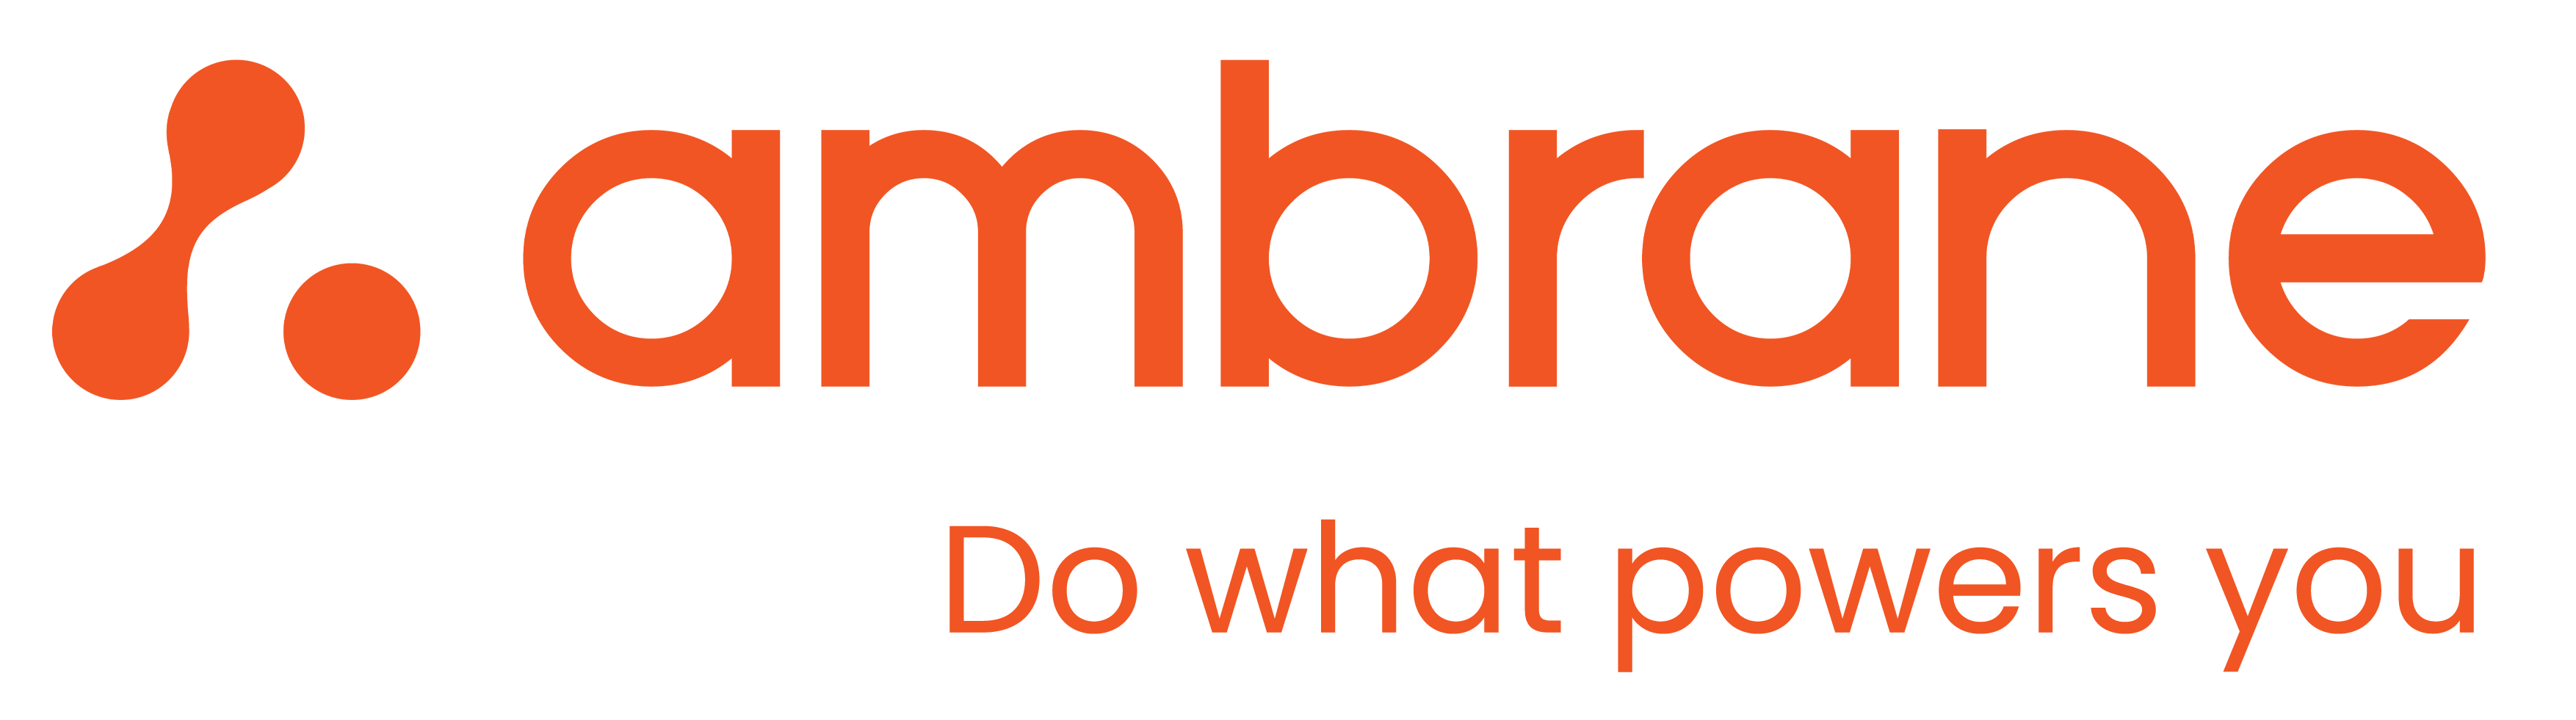 Primary-logo-orange_TAGLINE